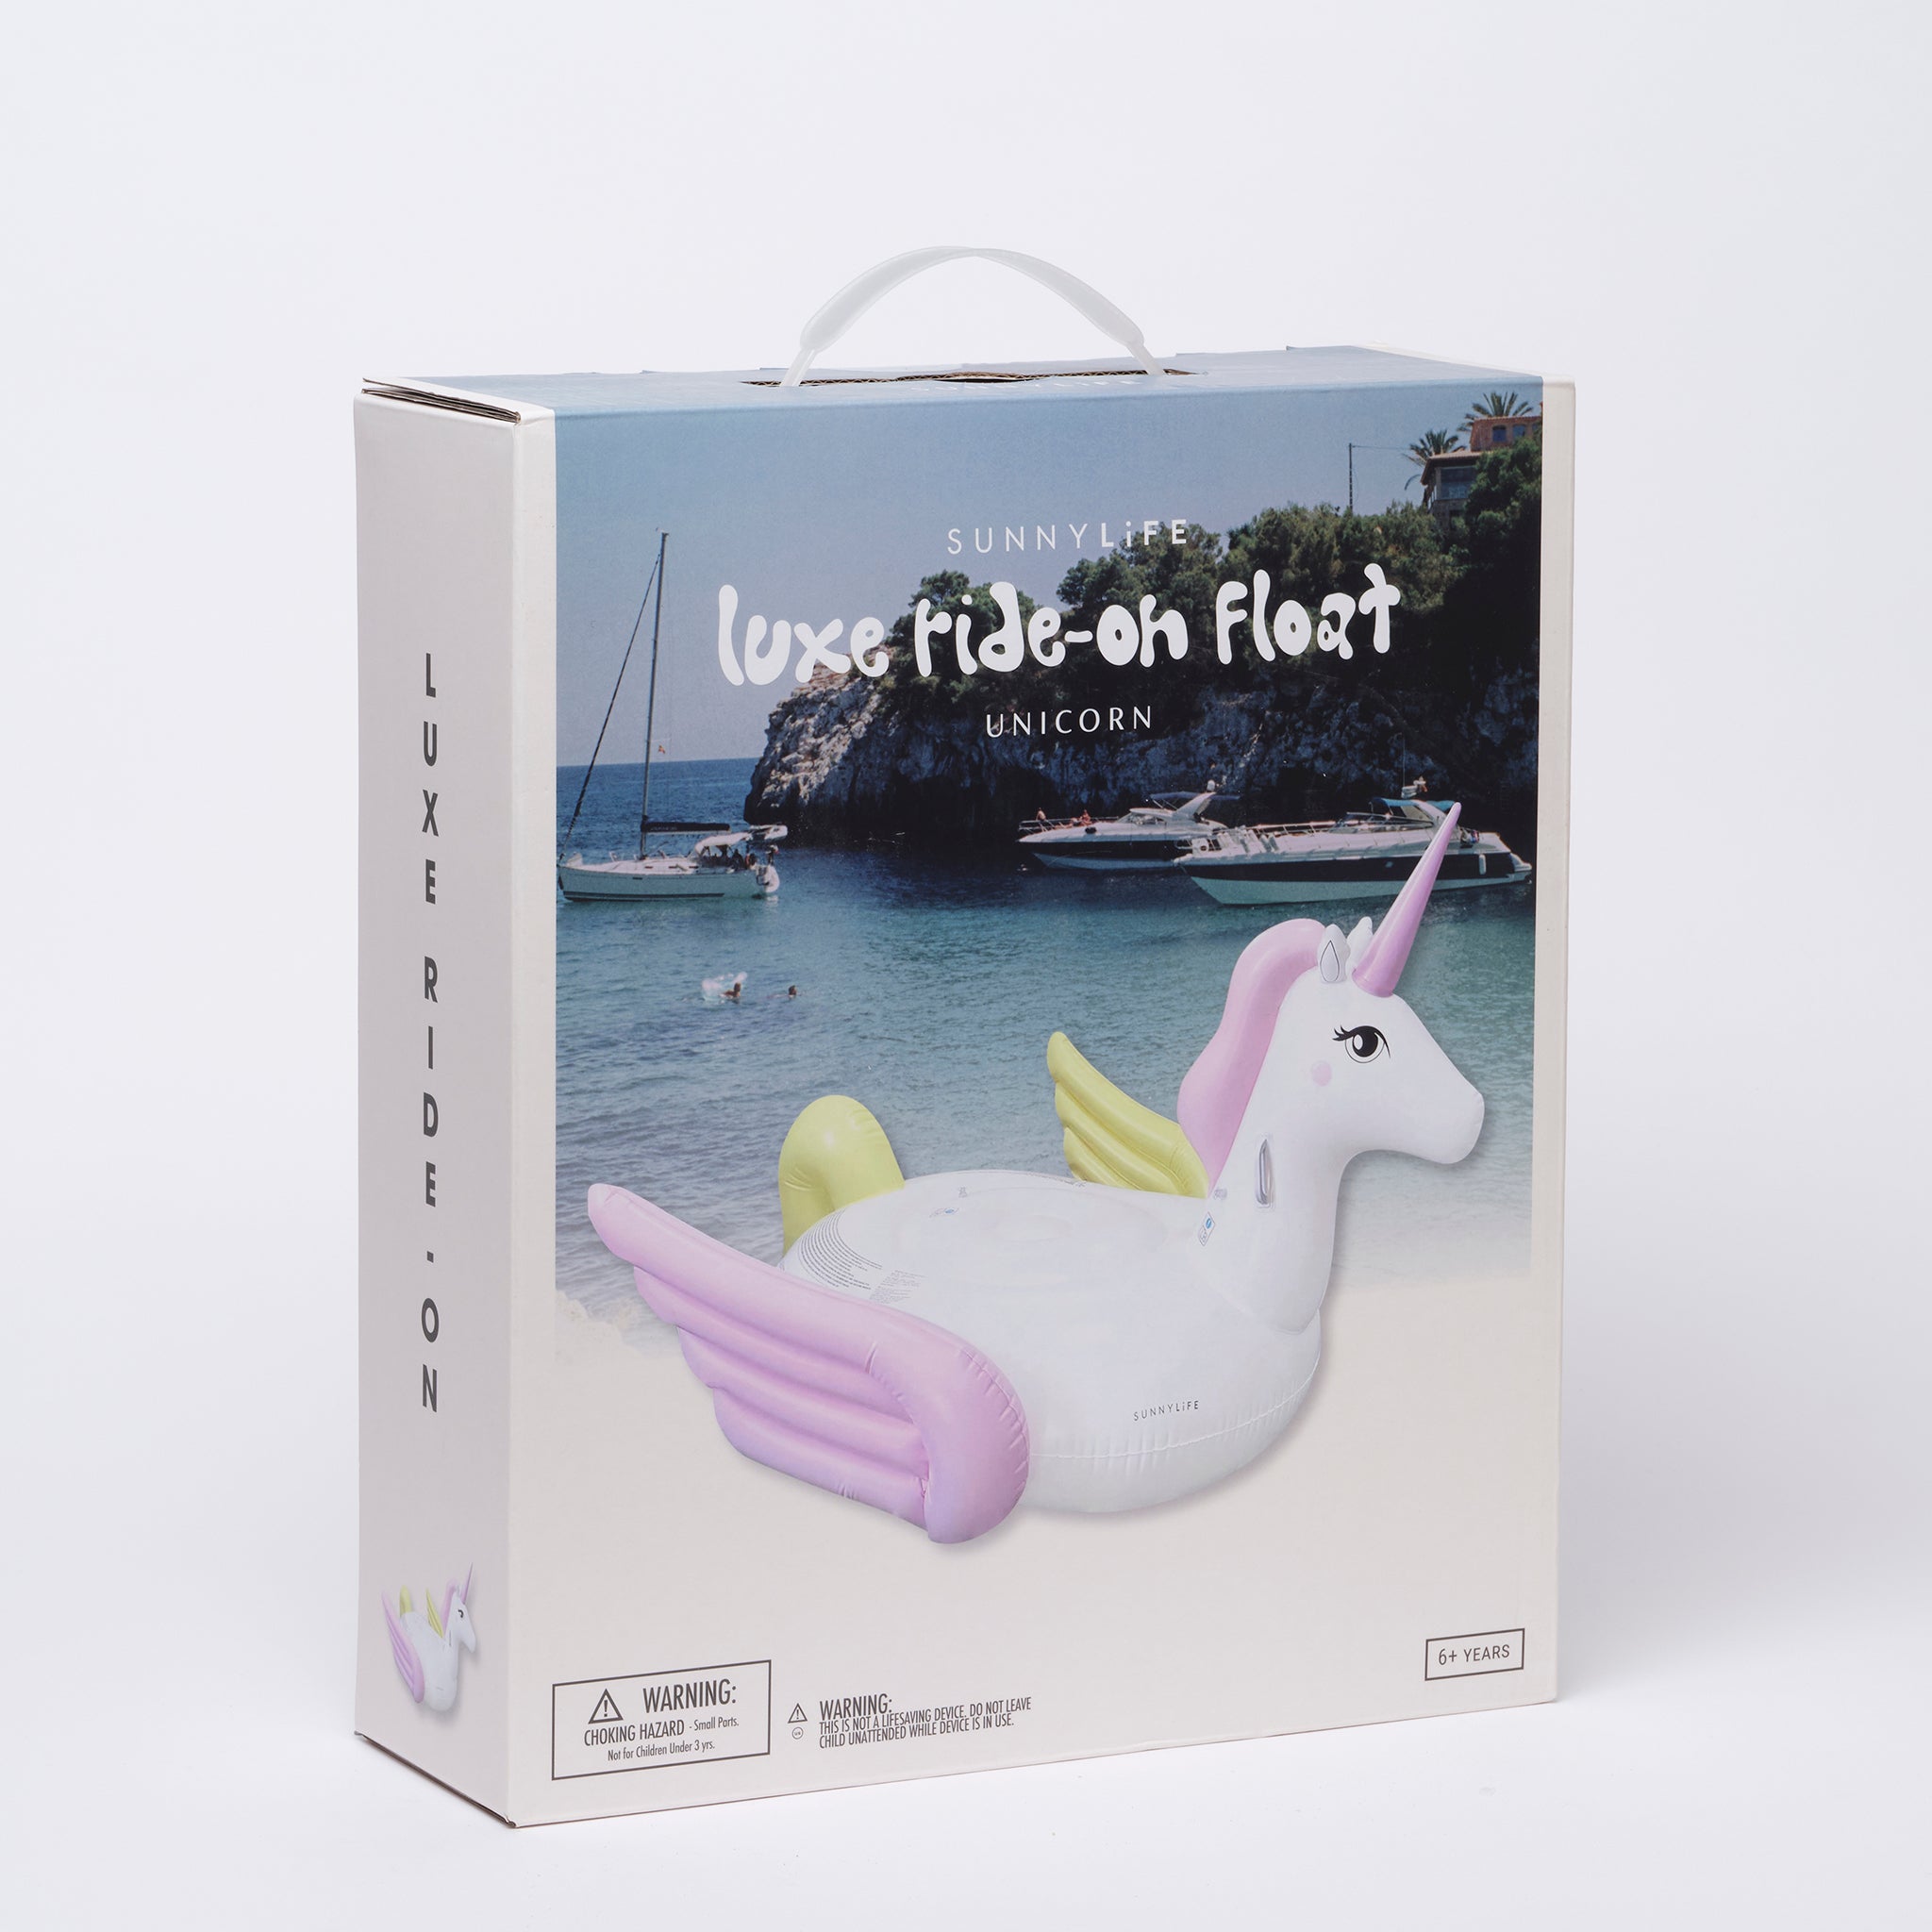 SUNNYLiFE |Luxe Ride-On Float | Unicorn Pastel